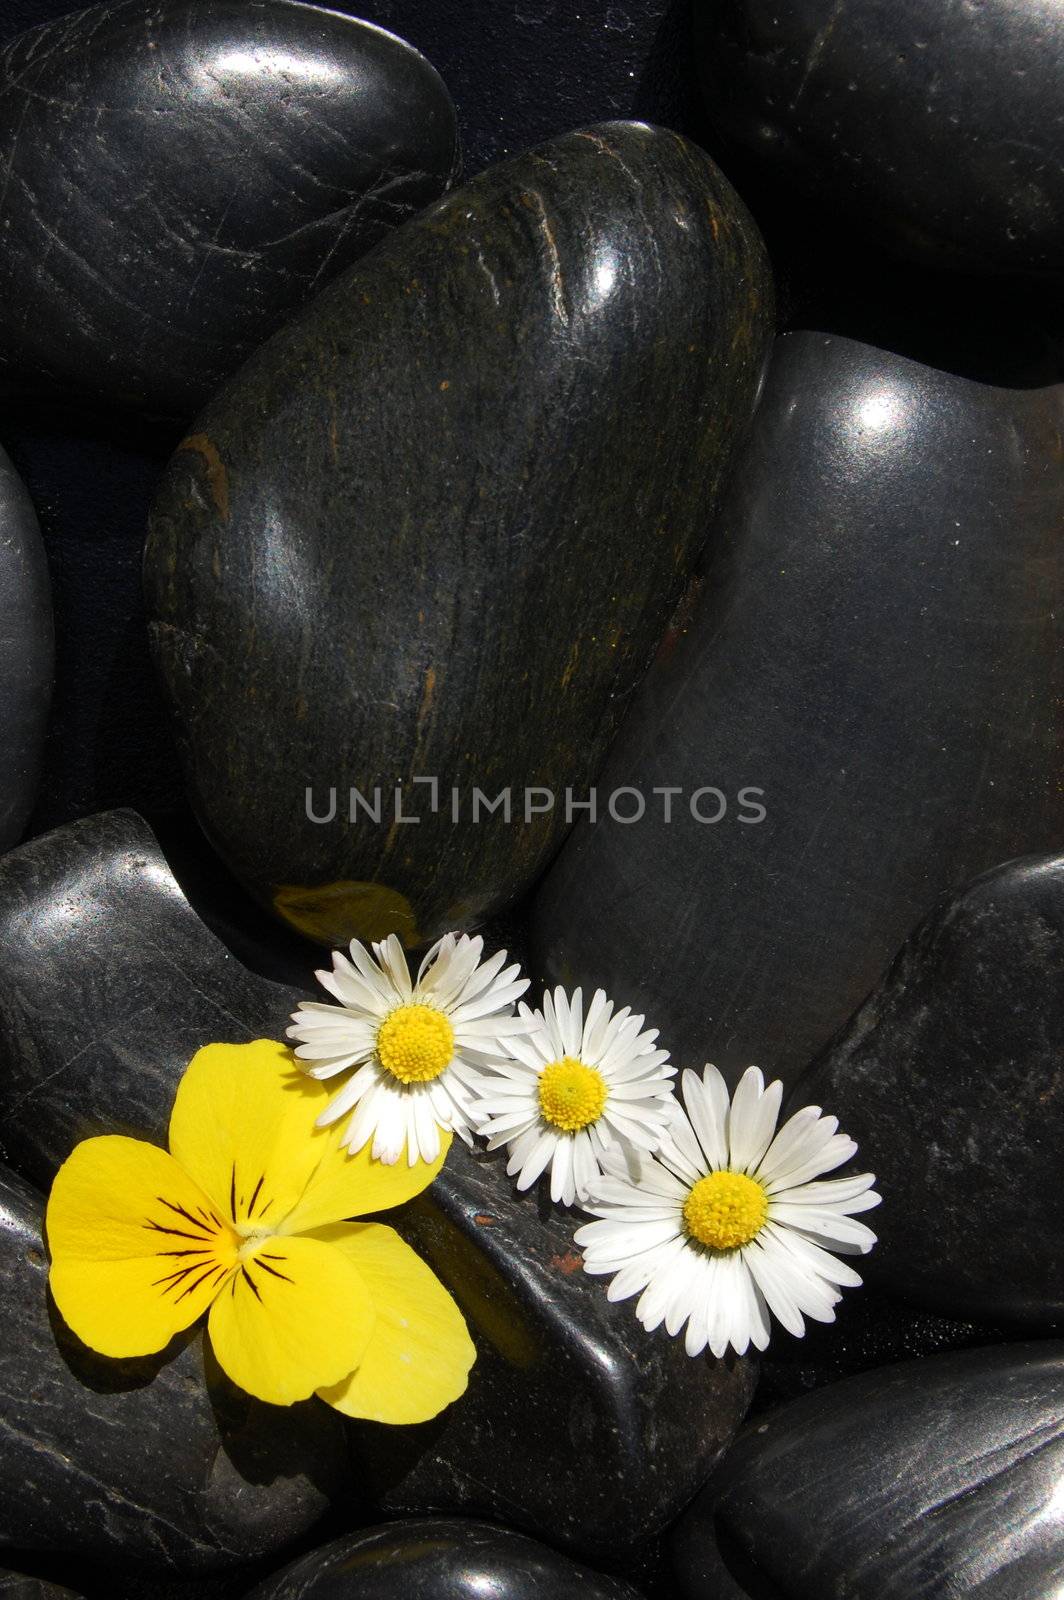 daisy flowers on black stones by gunnar3000